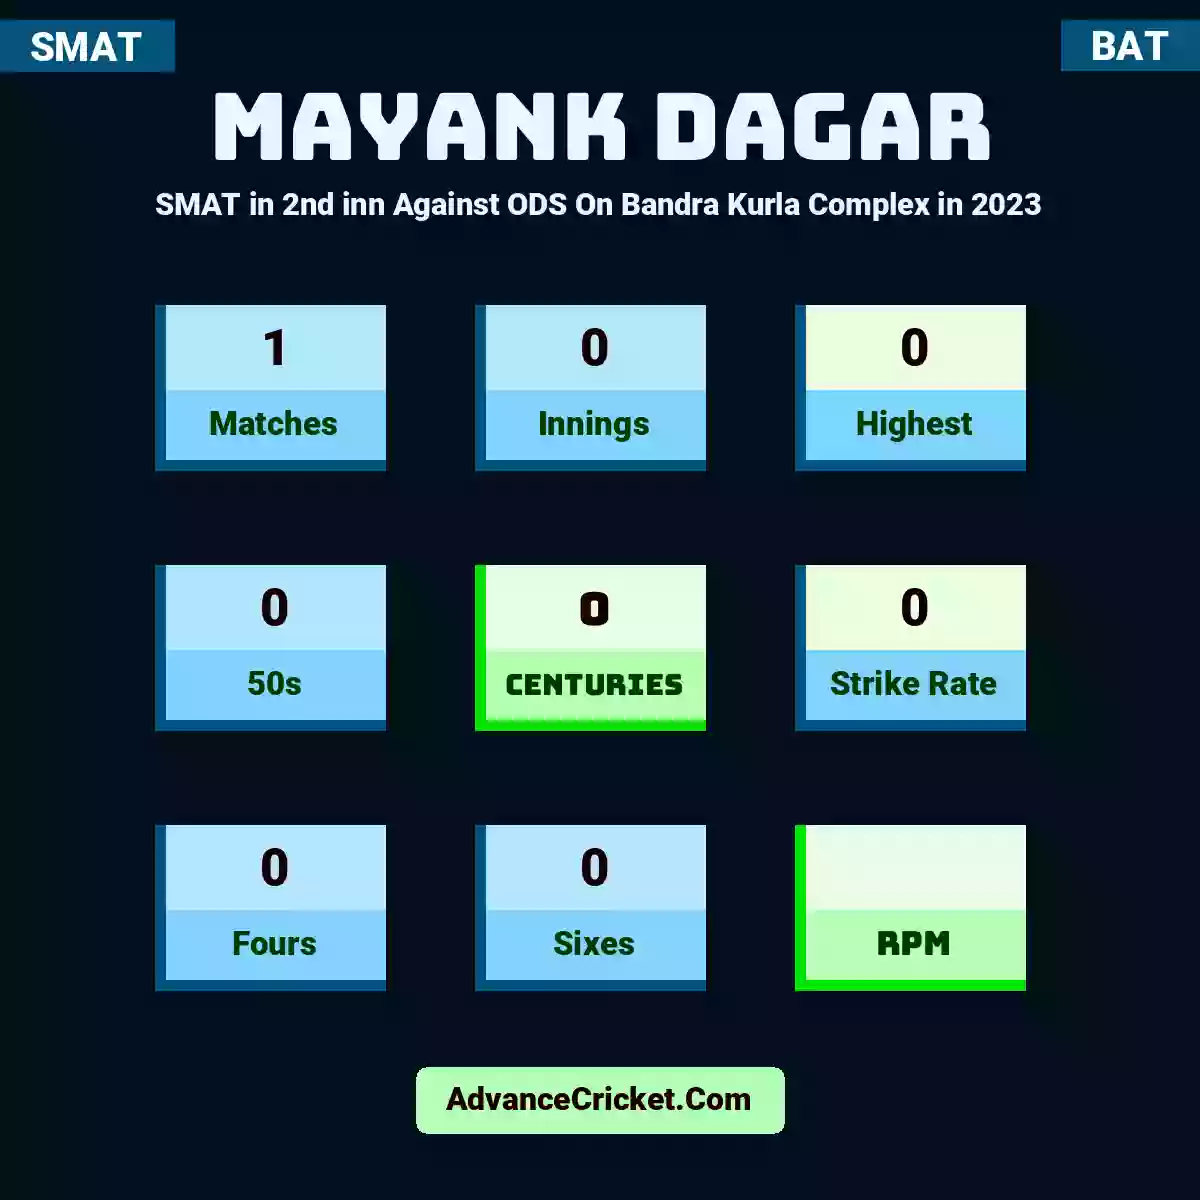 Mayank Dagar SMAT  in 2nd inn Against ODS On Bandra Kurla Complex in 2023, Mayank Dagar played 1 matches, scored 0 runs as highest, 0 half-centuries, and 0 centuries, with a strike rate of 0. M.Dagar hit 0 fours and 0 sixes.